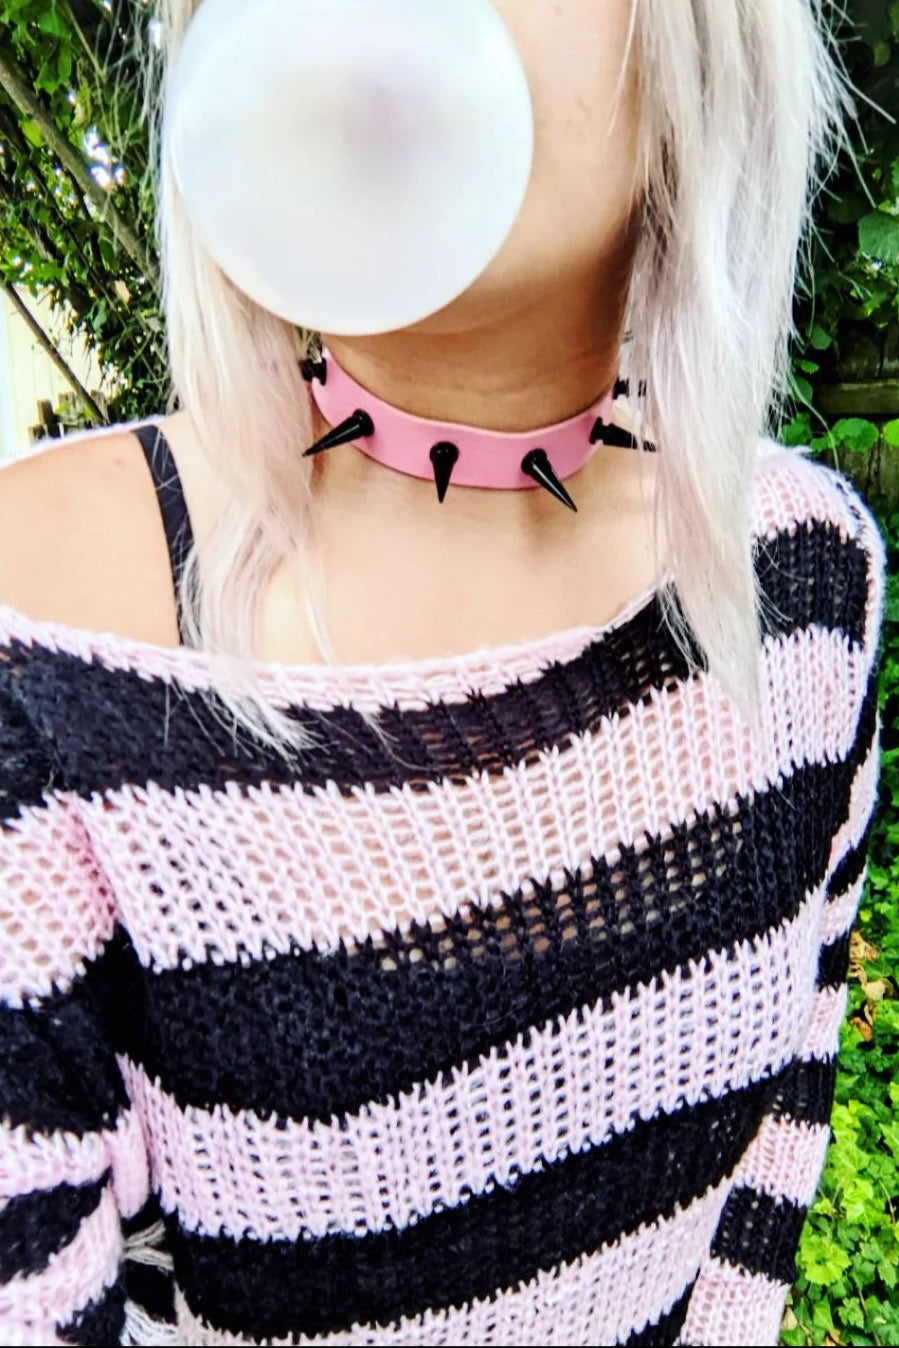 Pastel Pink/Black Striped Distressed Sweater